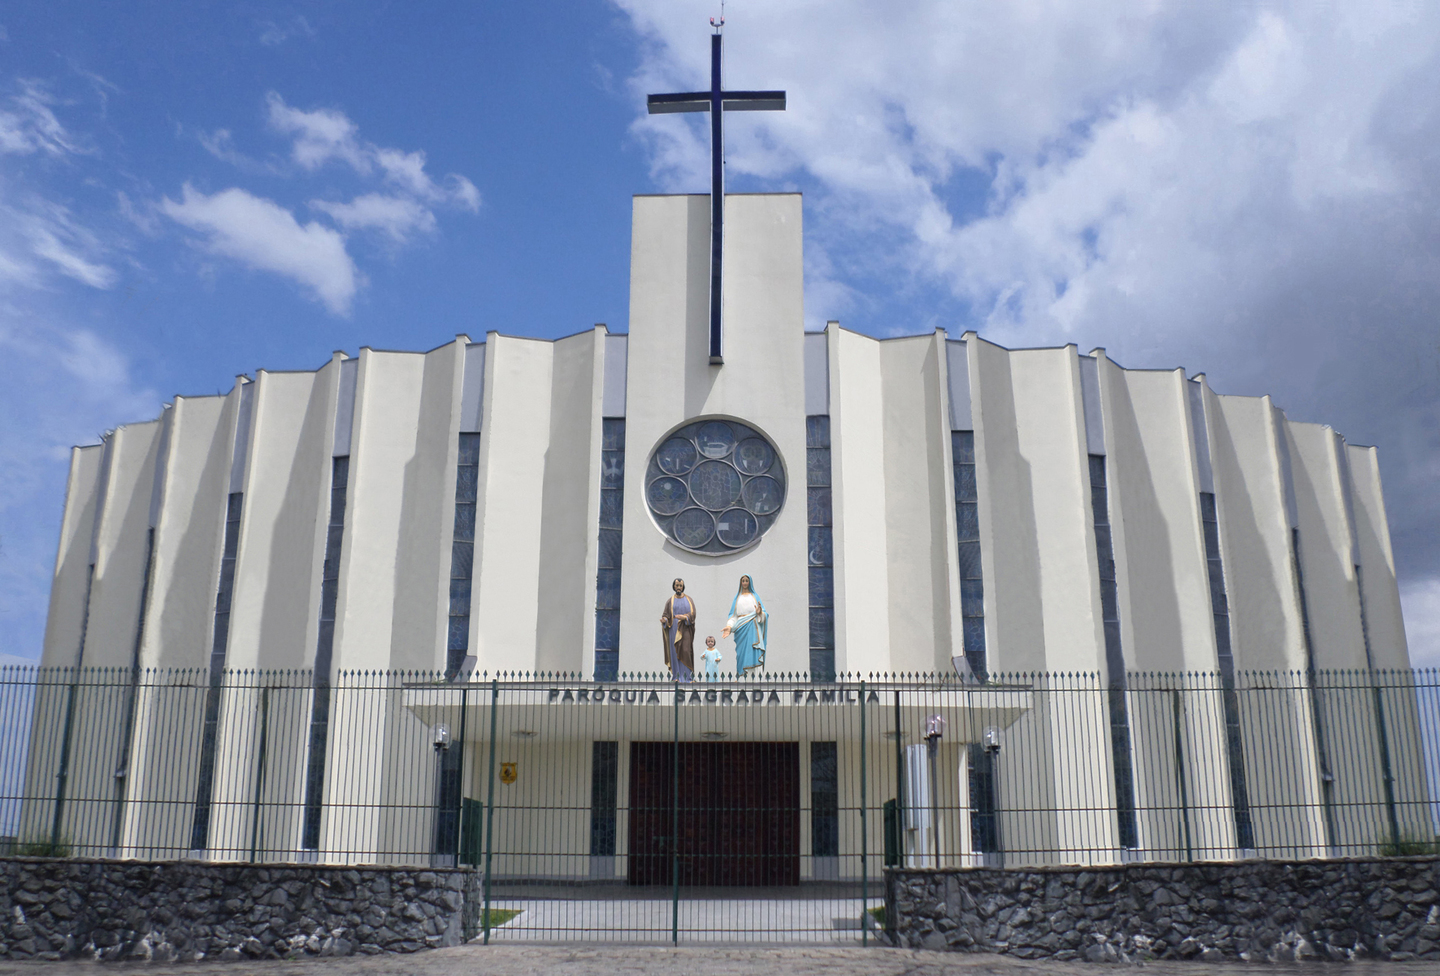 Paróquia Sagrada Família - Curitiba/PR